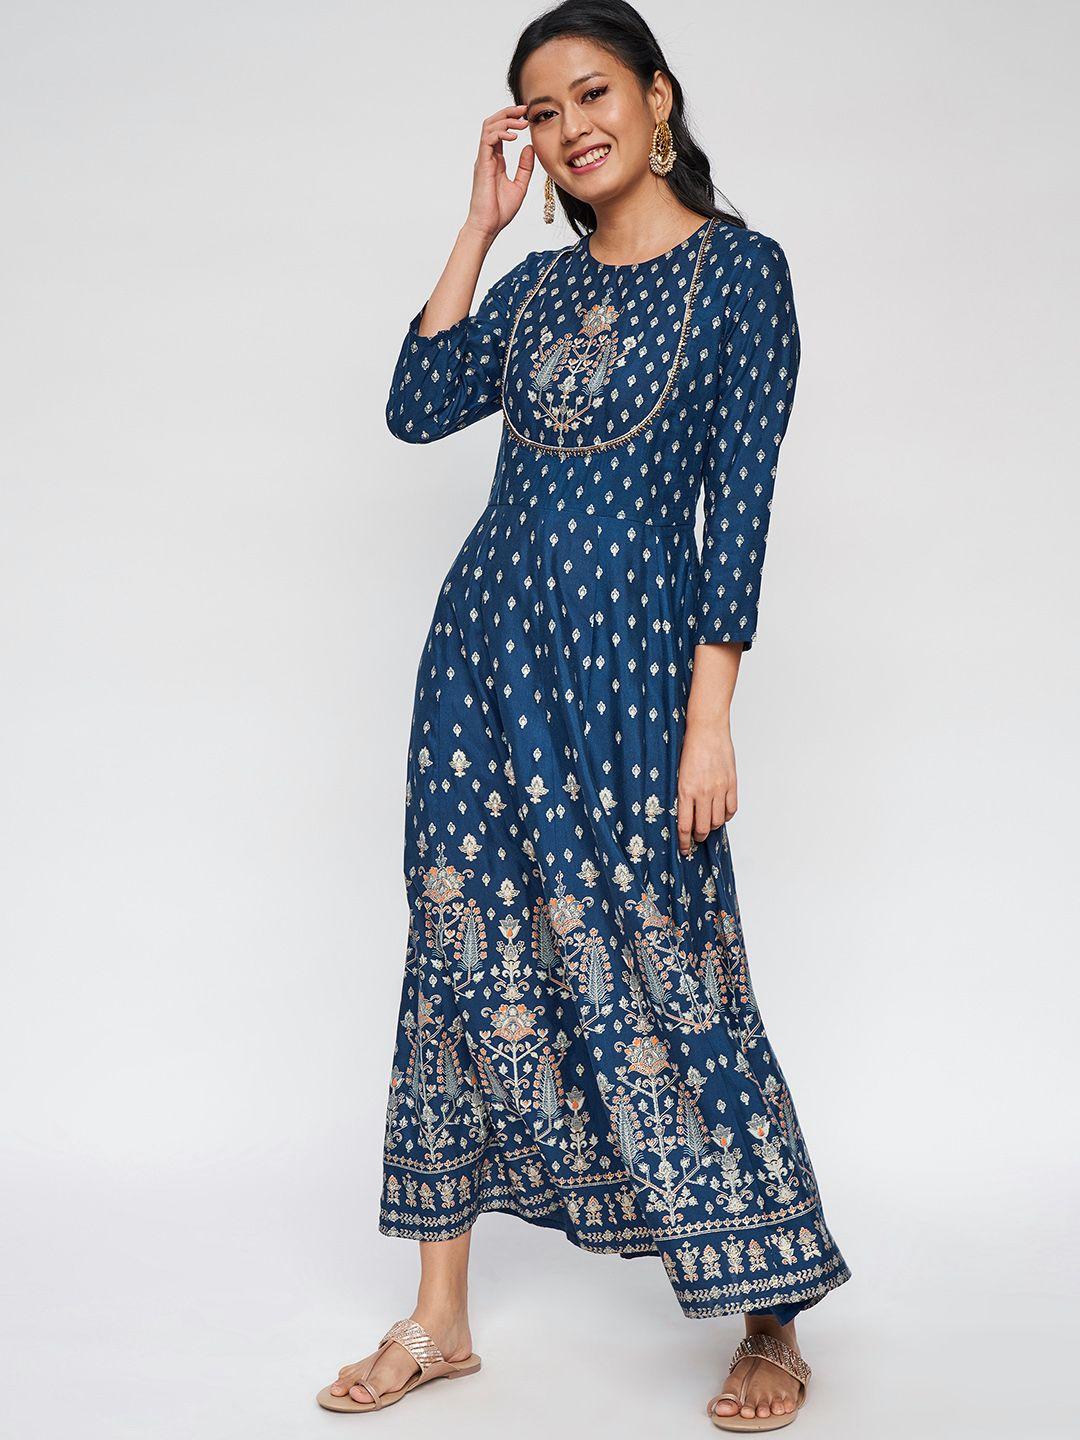 global desi navy blue & golden ethnic motifs ethnic maxi dress